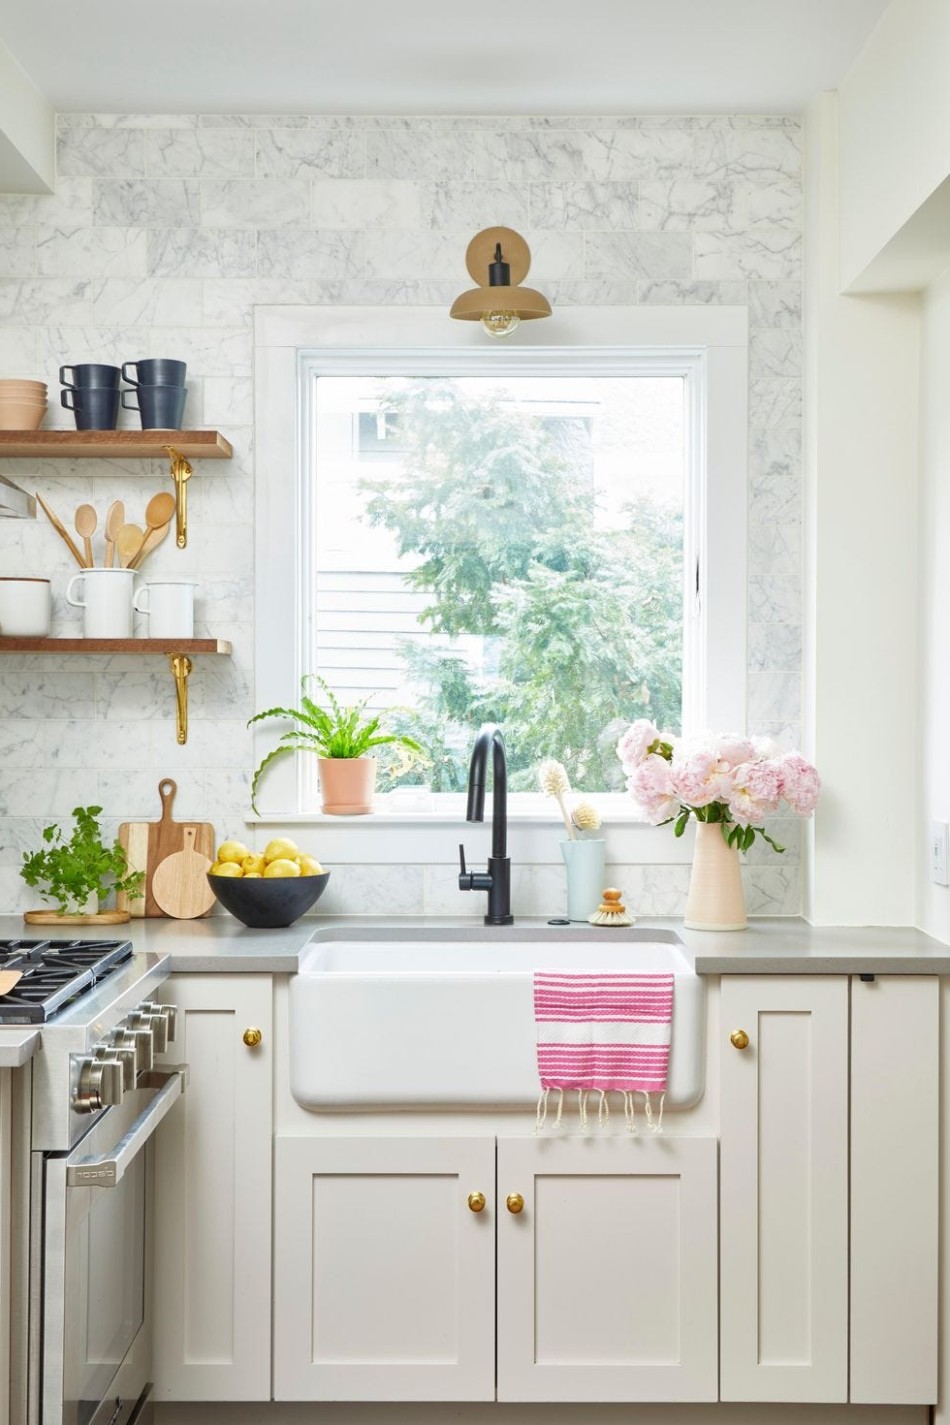 6 Best Small Kitchen Design Ideas - Tiny Kitchen Decorating - small kitchen design images